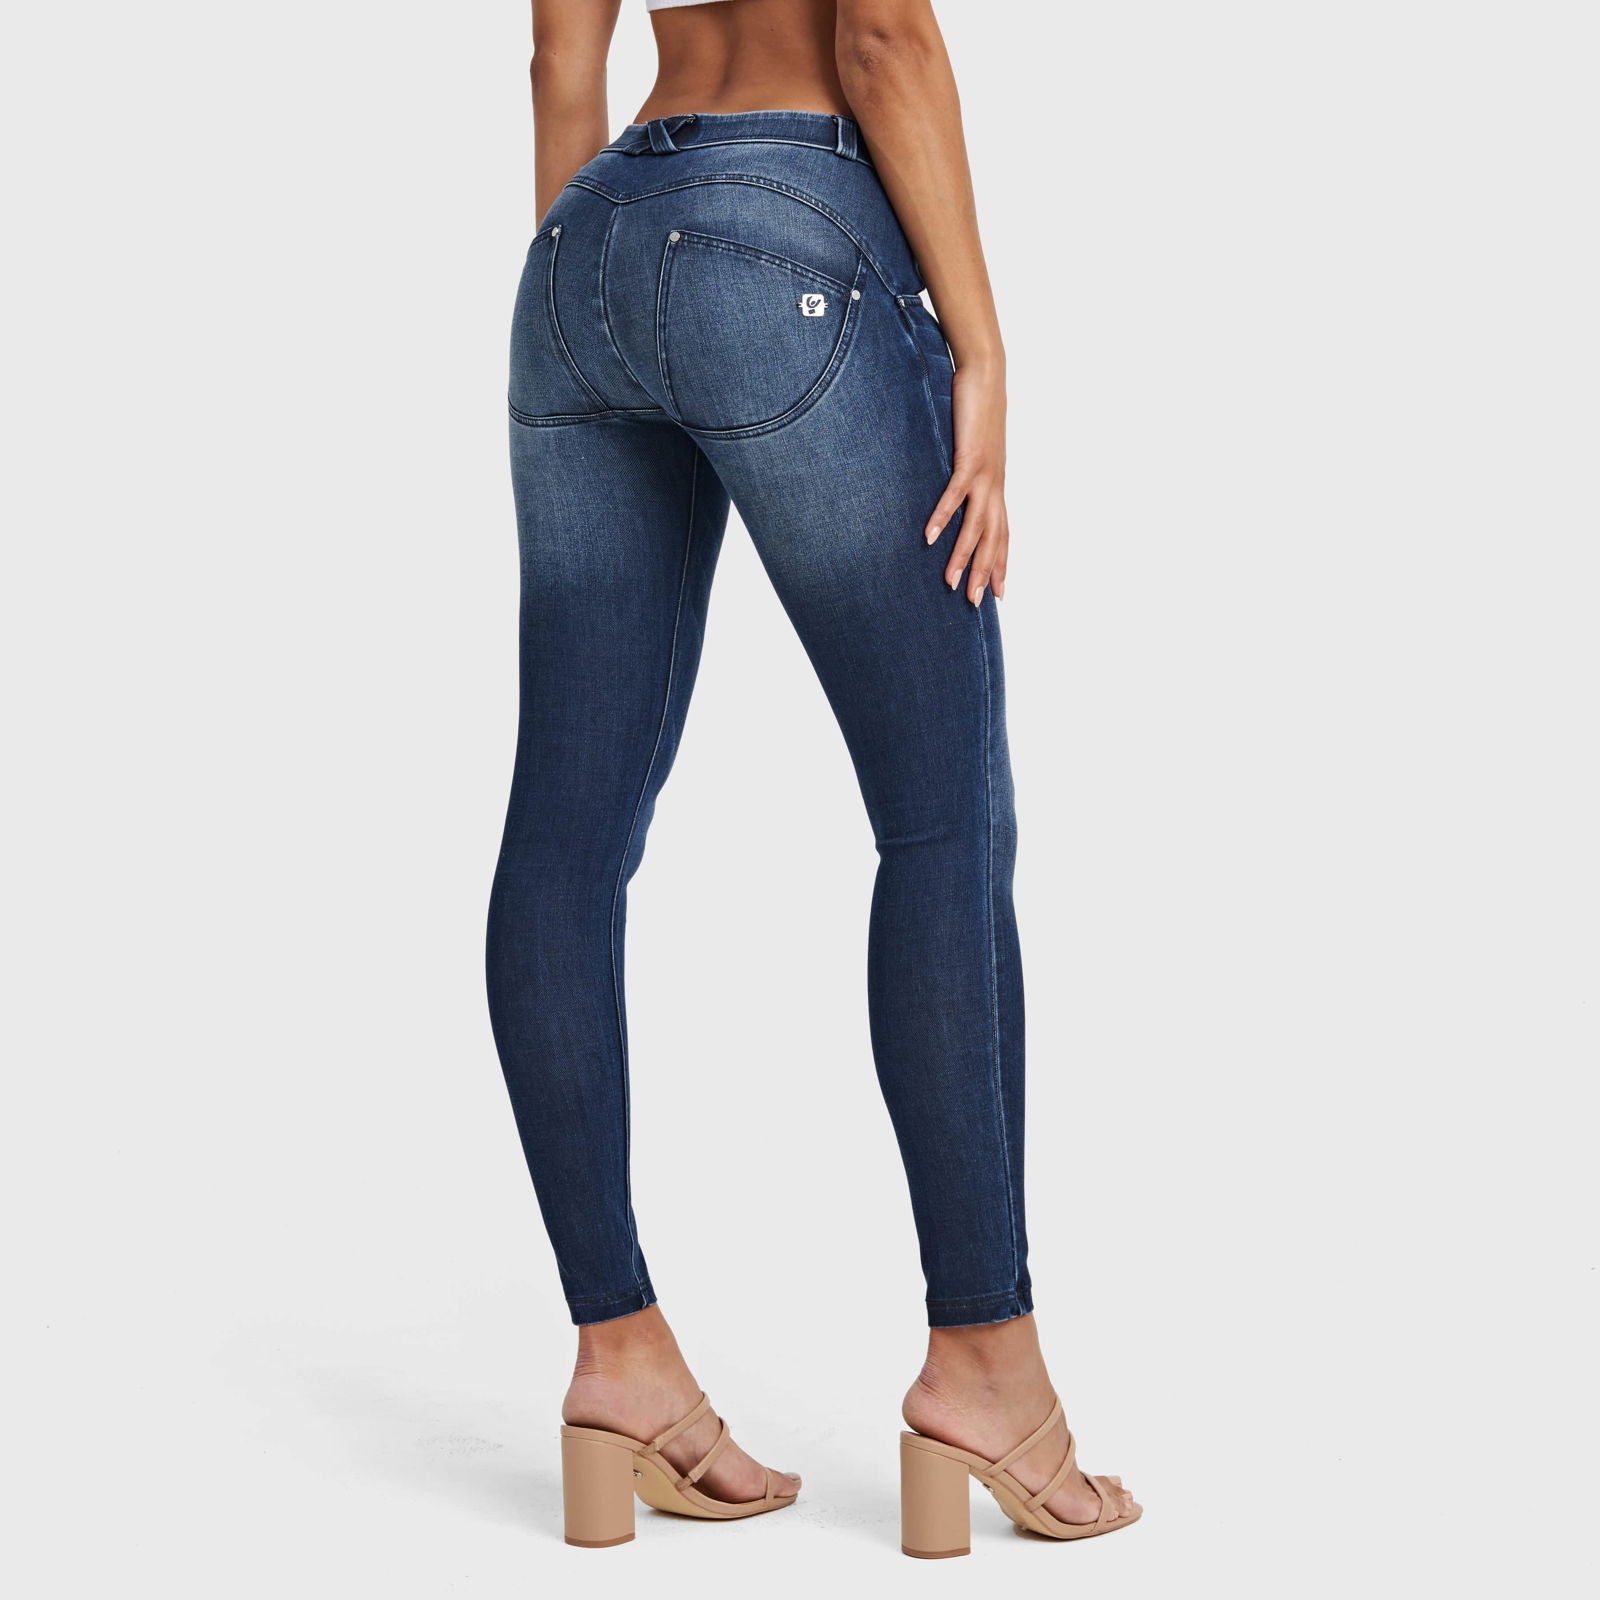 WR.UP® SNUG Jeans - Mid Rise - Full Length - Dark Blue + Blue Stitching 1